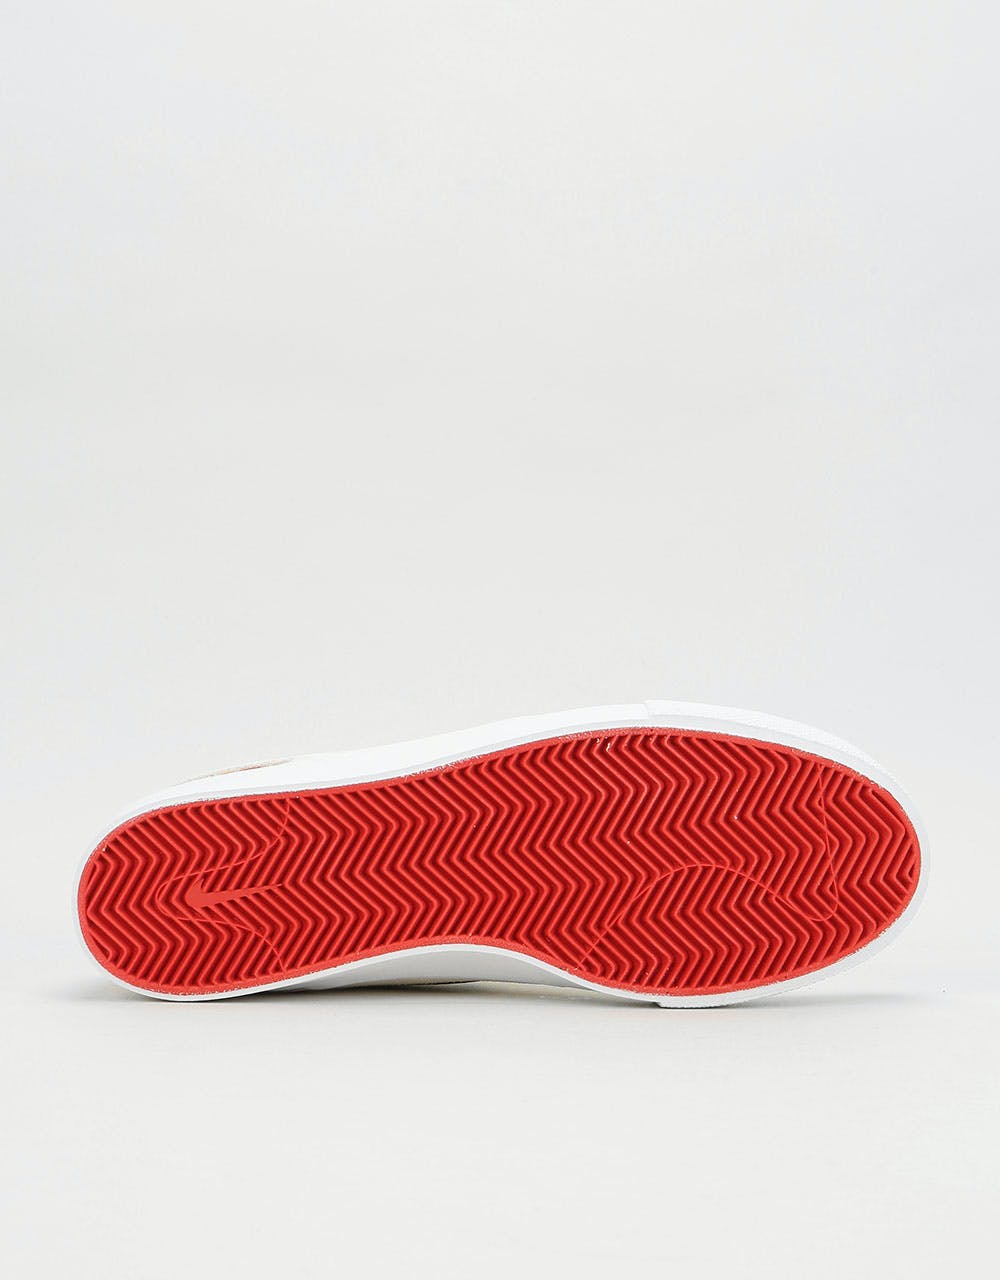 Nike SB Zoom Janoski RM Premium Skate Shoes - Pale Ivory/Black-Red